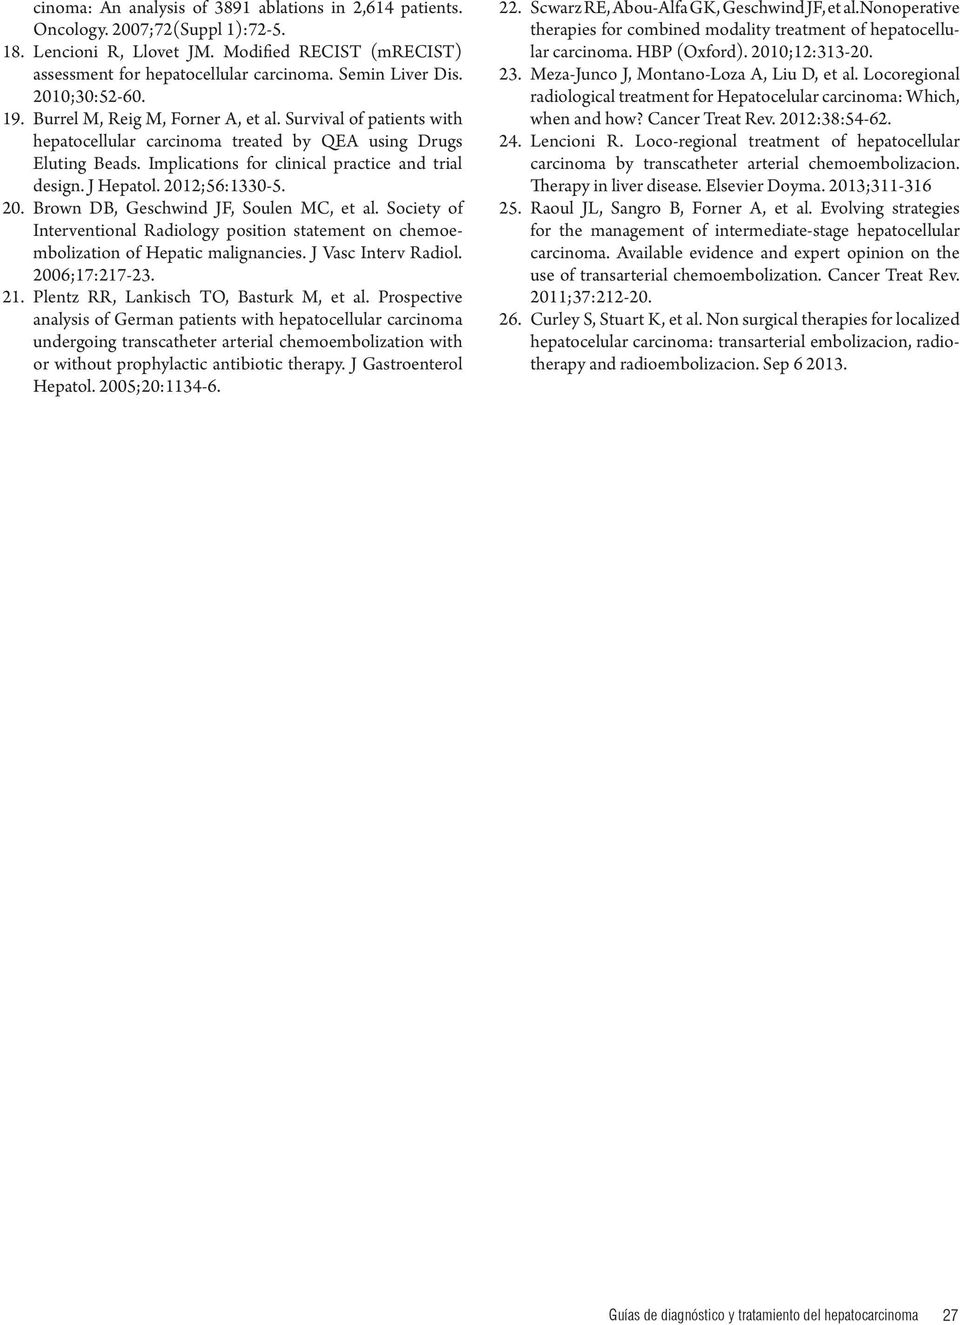 J Hepatol. 2012;56:1330-5. 20. Brown DB, Geschwind JF, Soulen MC, et al. Society of Interventional Radiology position statement on chemoembolization of Hepatic malignancies. J Vasc Interv Radiol.